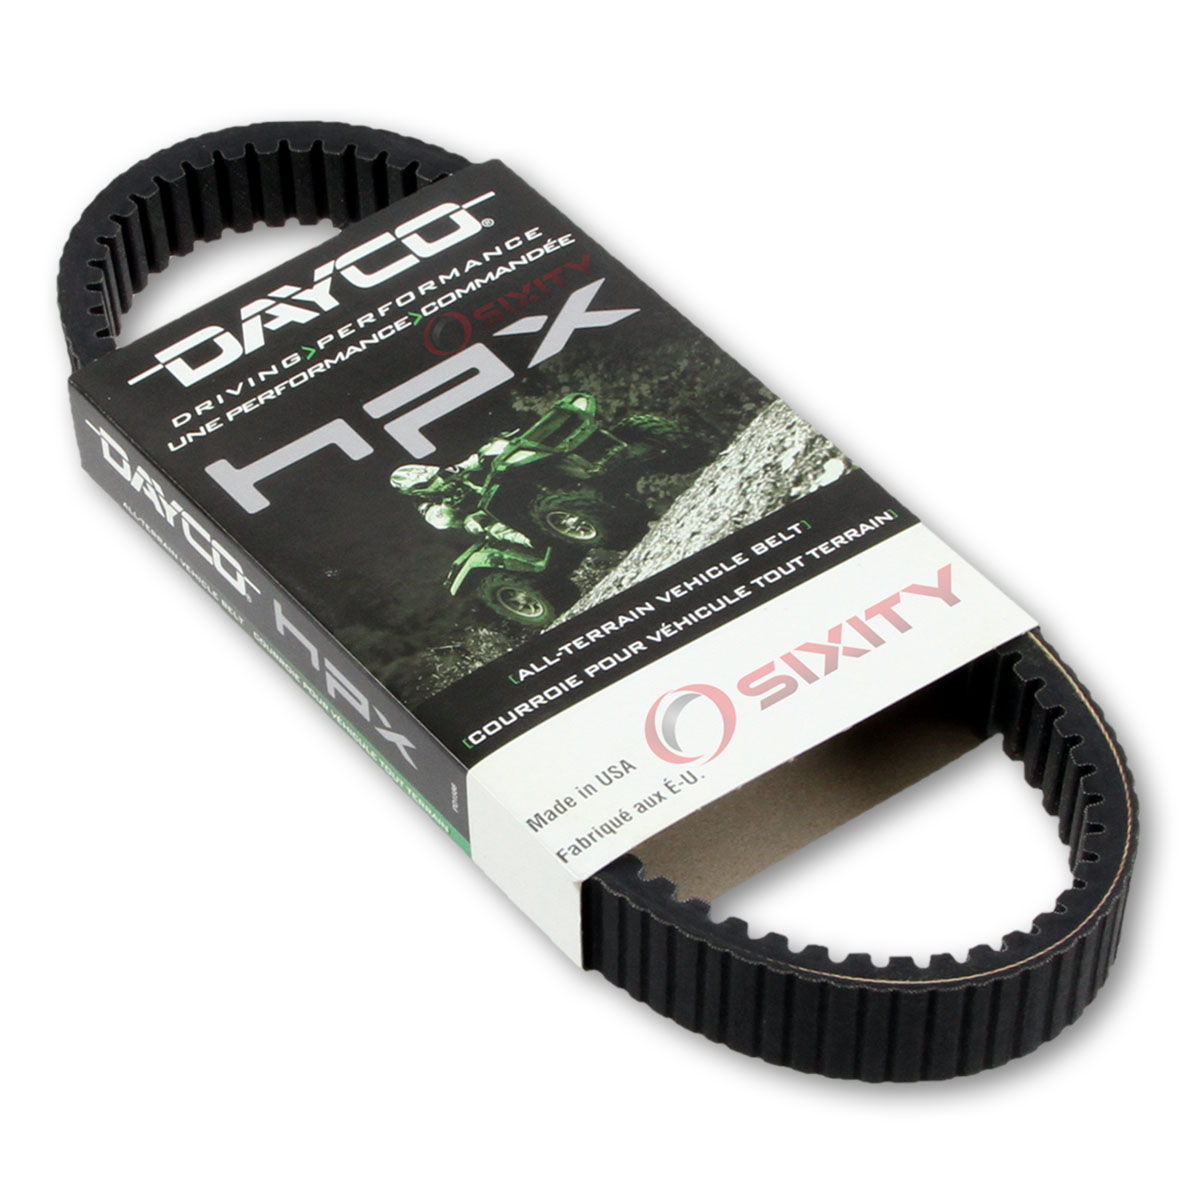 Dayco HPX Drive Belt for 2012-2013 Arctic Cat 550i LTD - High Performance